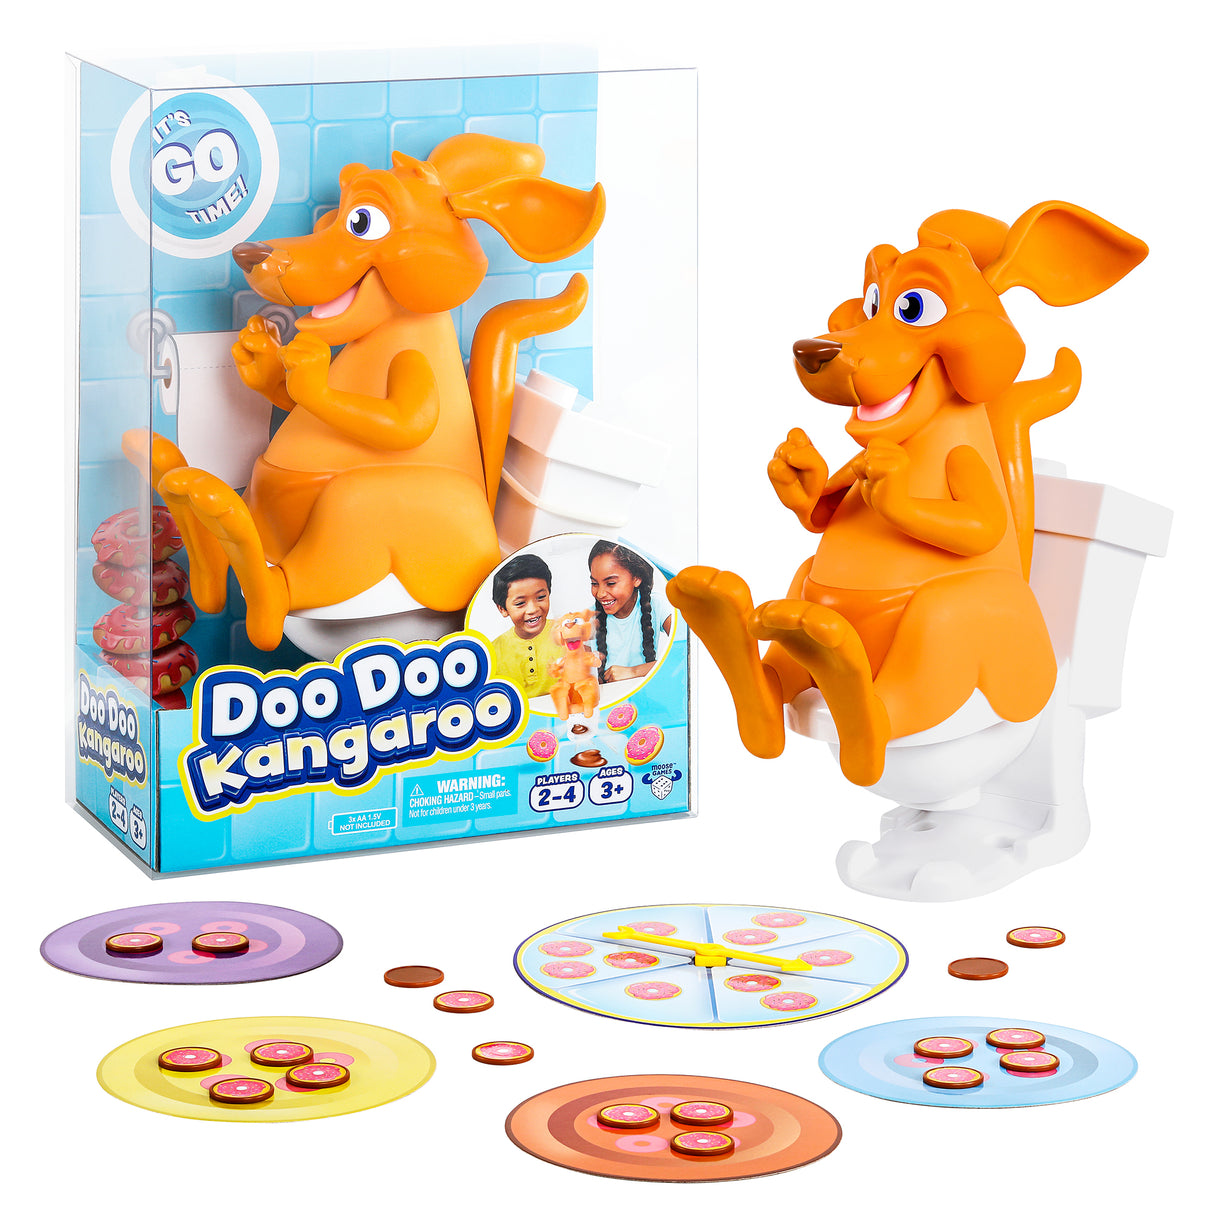 Doo Doo Kangaroo Game